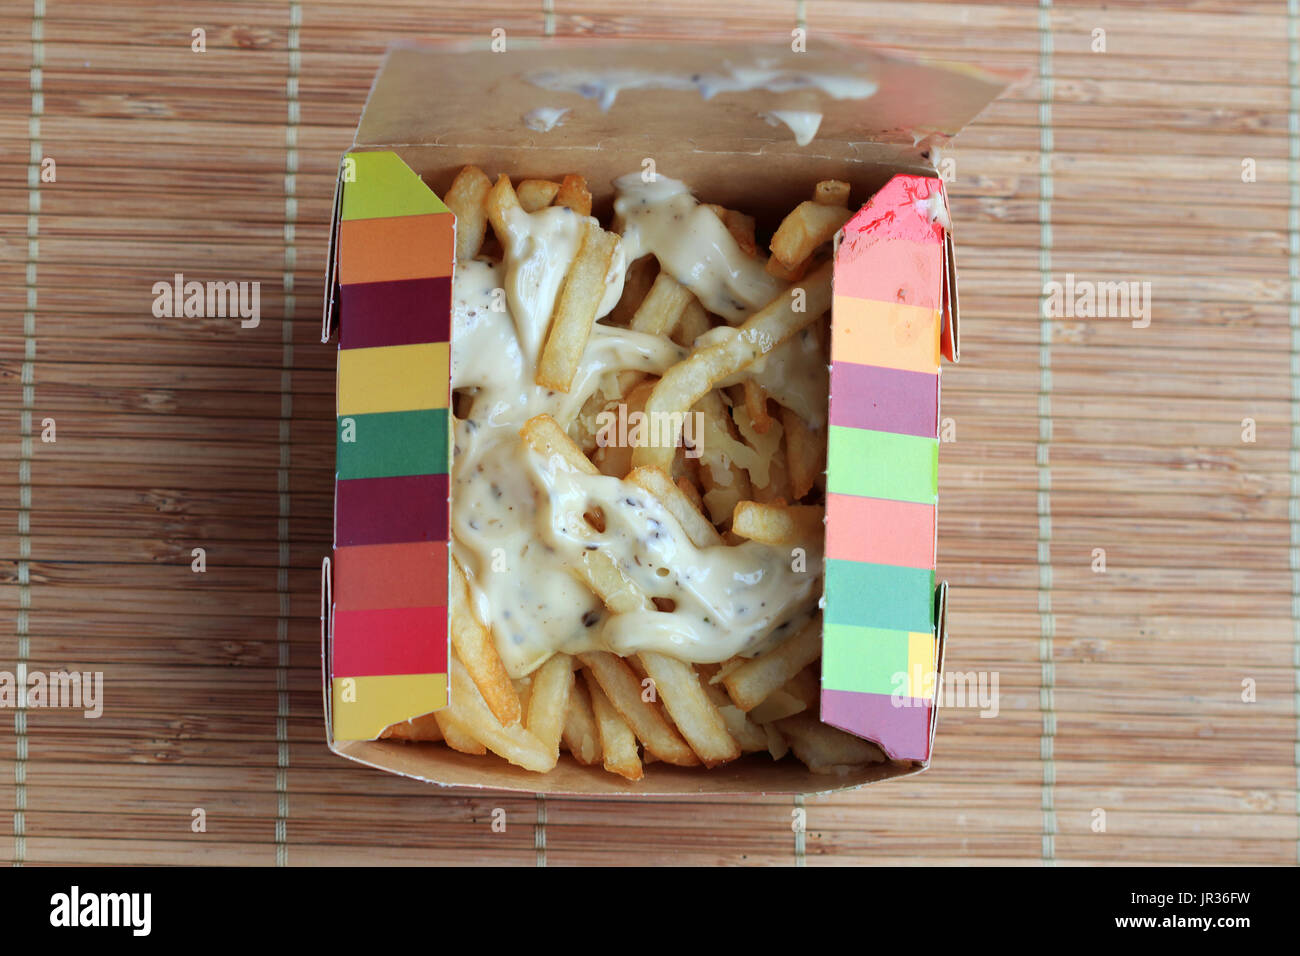 McDonald's Truffle Mayo & Parmesan Loaded Fries against bamboo background Stock Photo